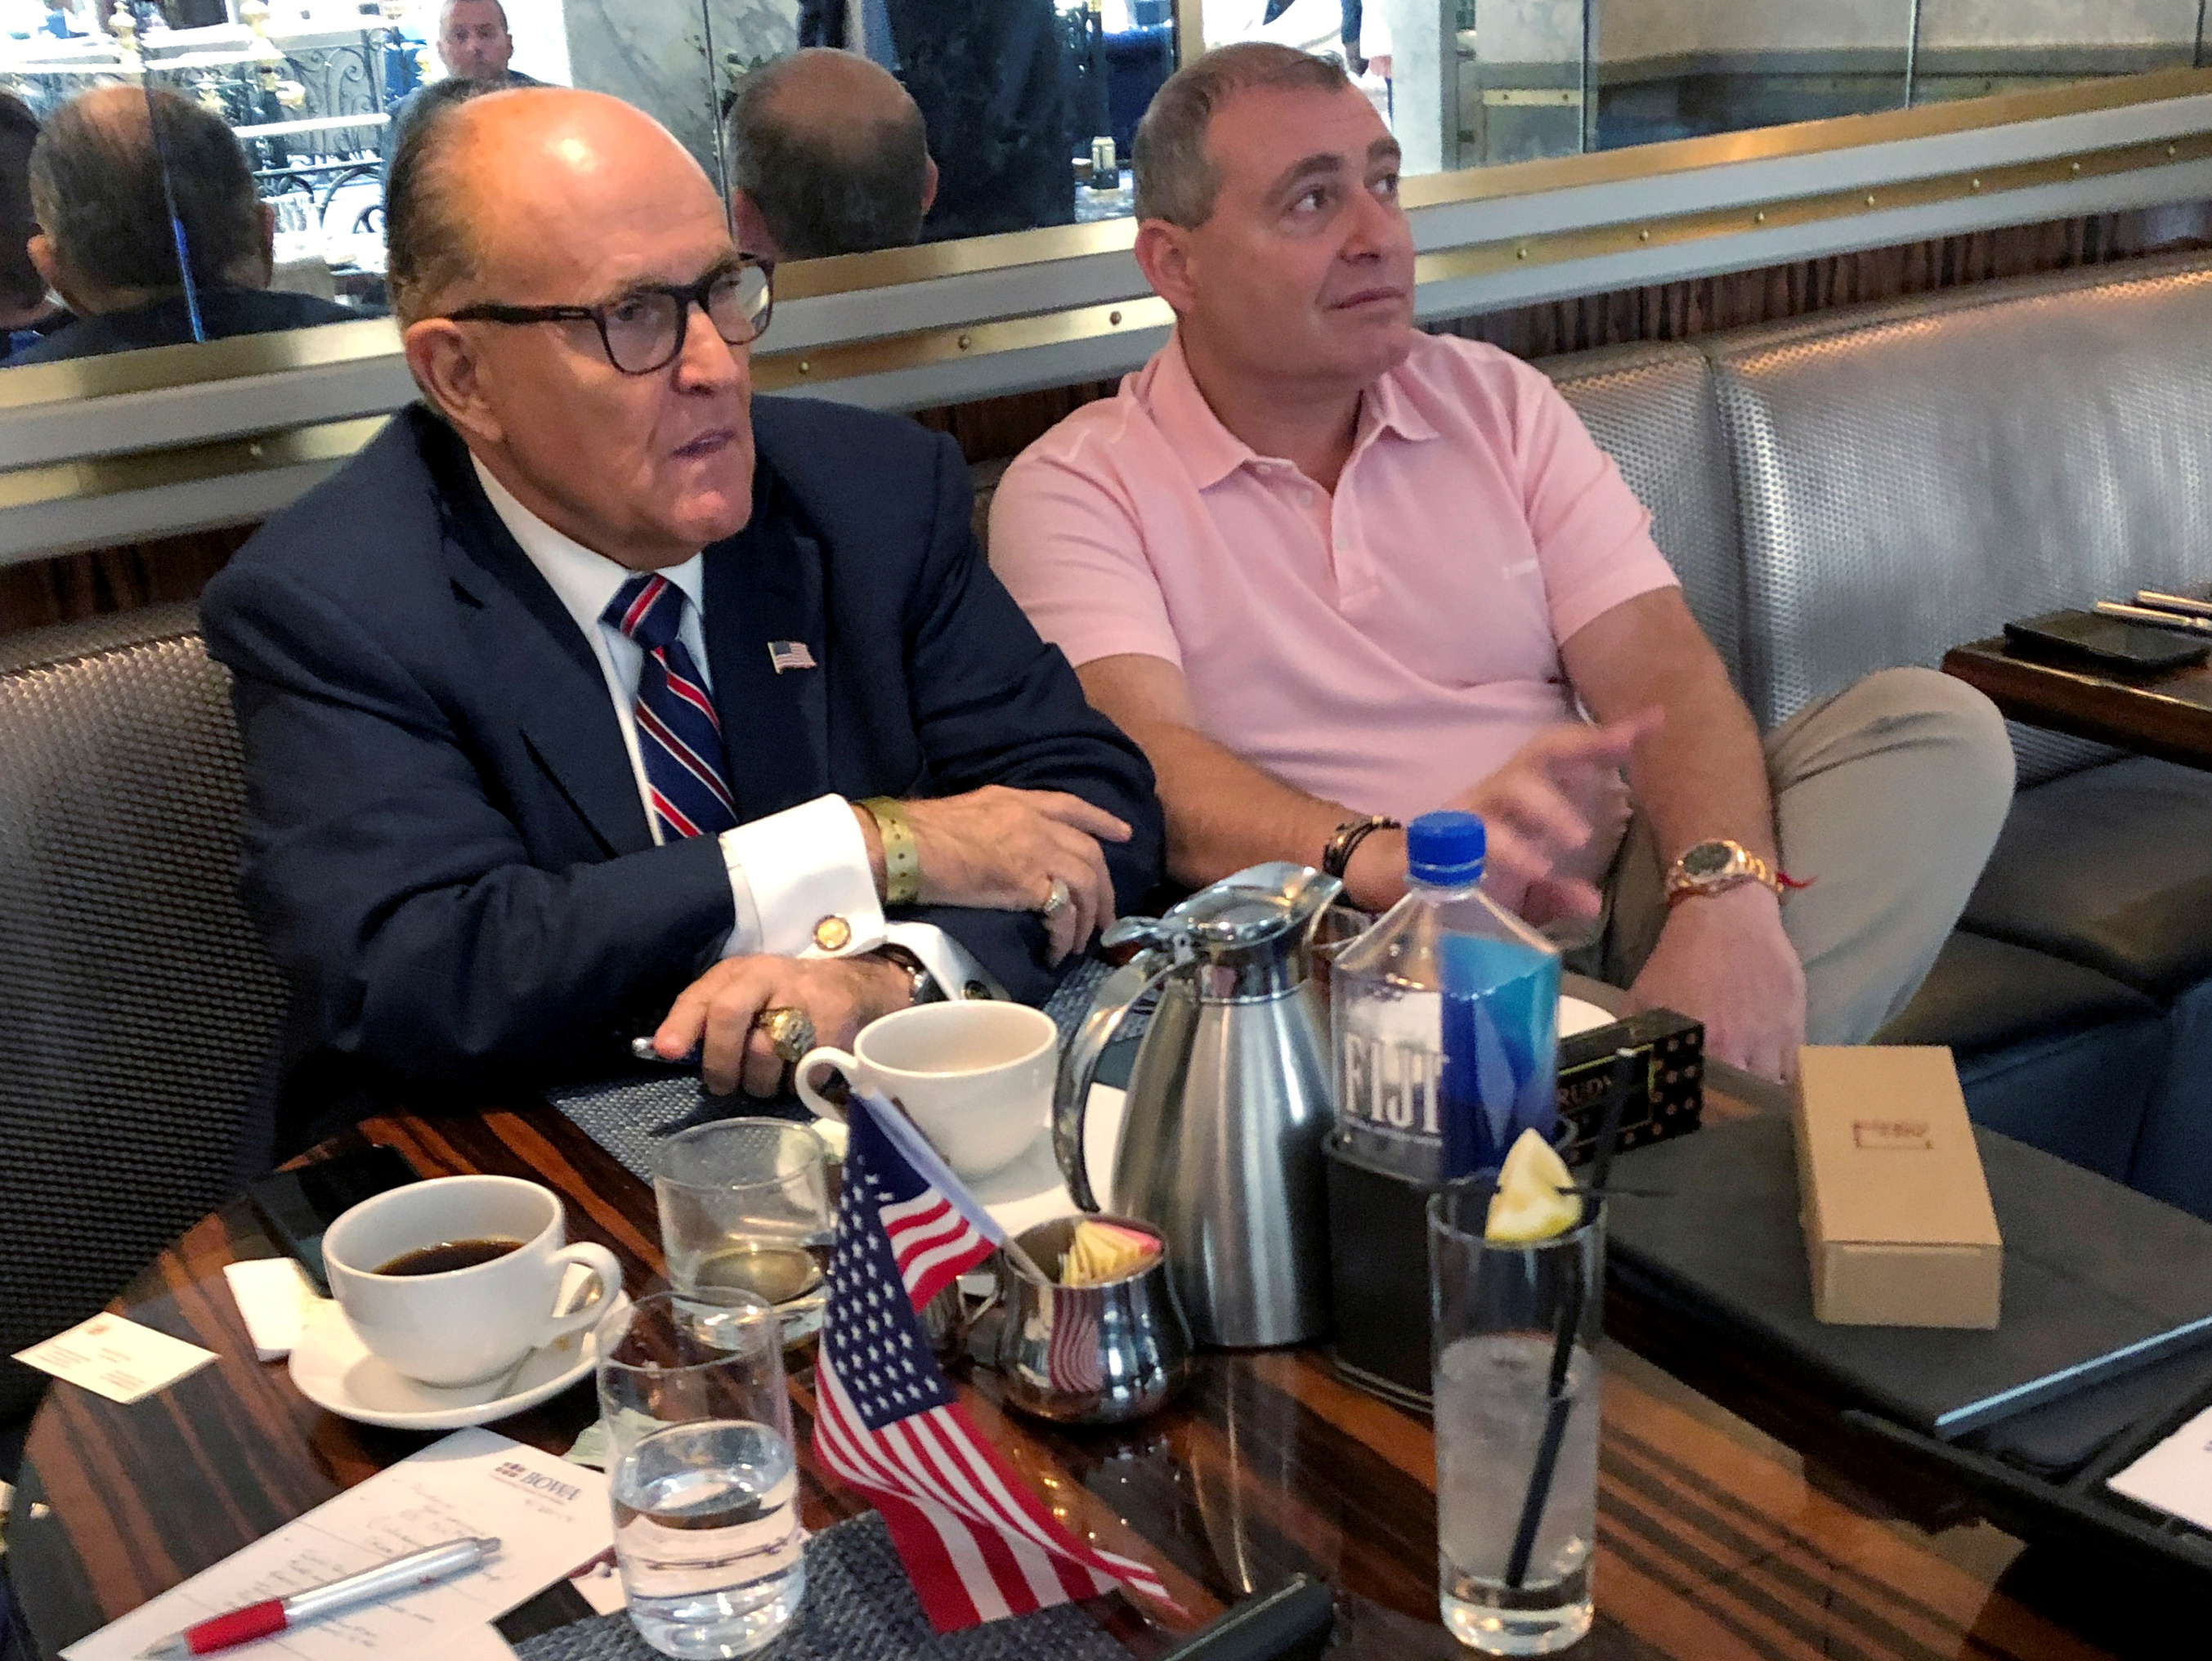 U.S. President Donald Trump's personal lawyer Rudy Giuliani has coffee with Ukrainian-American businessman Lev Parnas at the Trump International Hotel in Washington, U.S. September 20, 2019. (REUTERS/Aram Roston/File Photo)